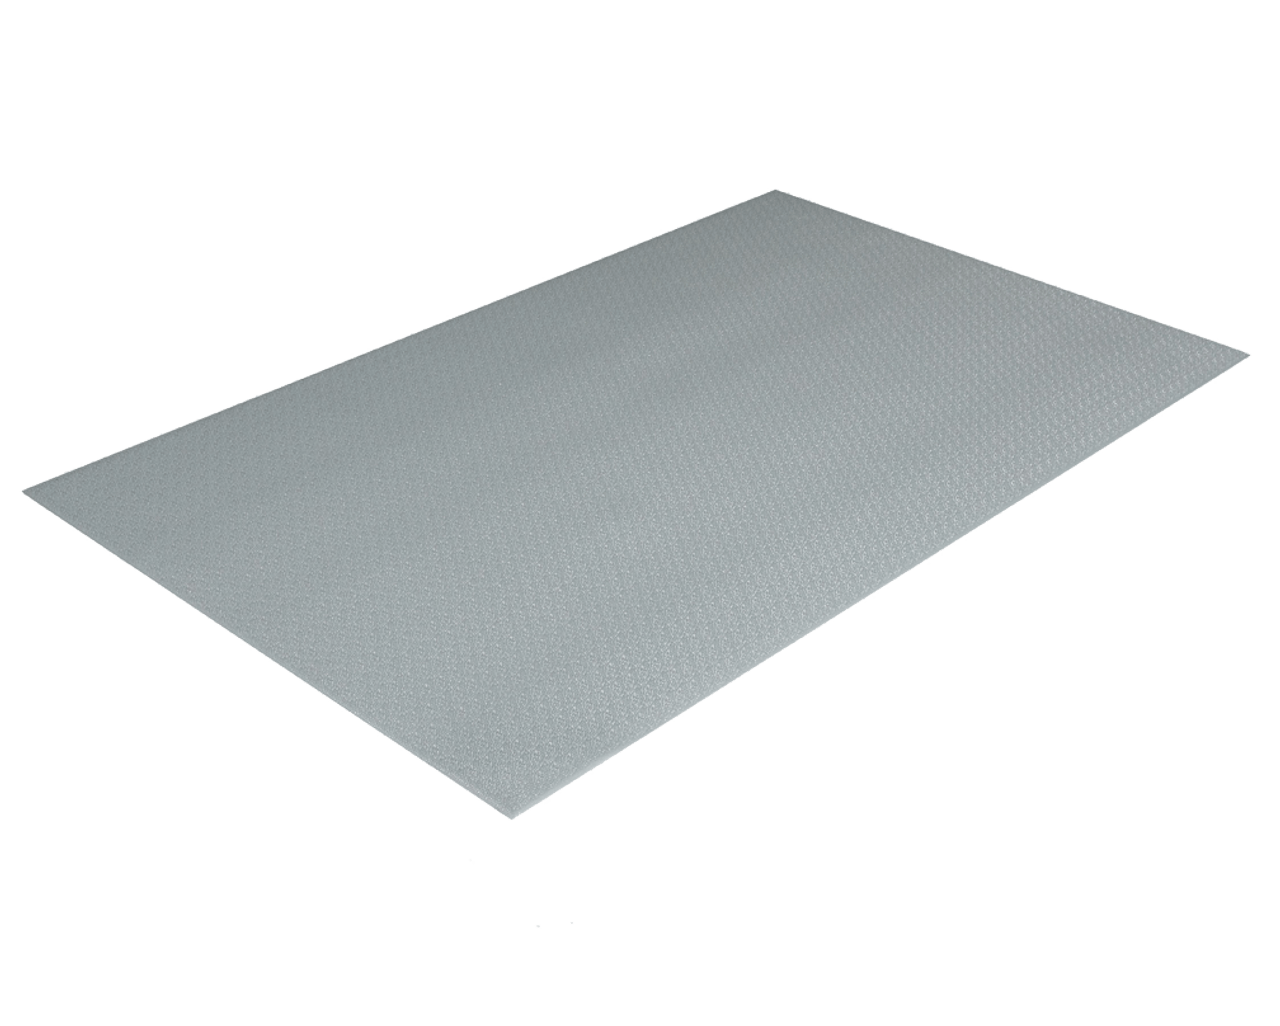 Crown Mats - Beveled-Edge Anti-Fatigue Floor Mat - 2' x 5' - Pebble